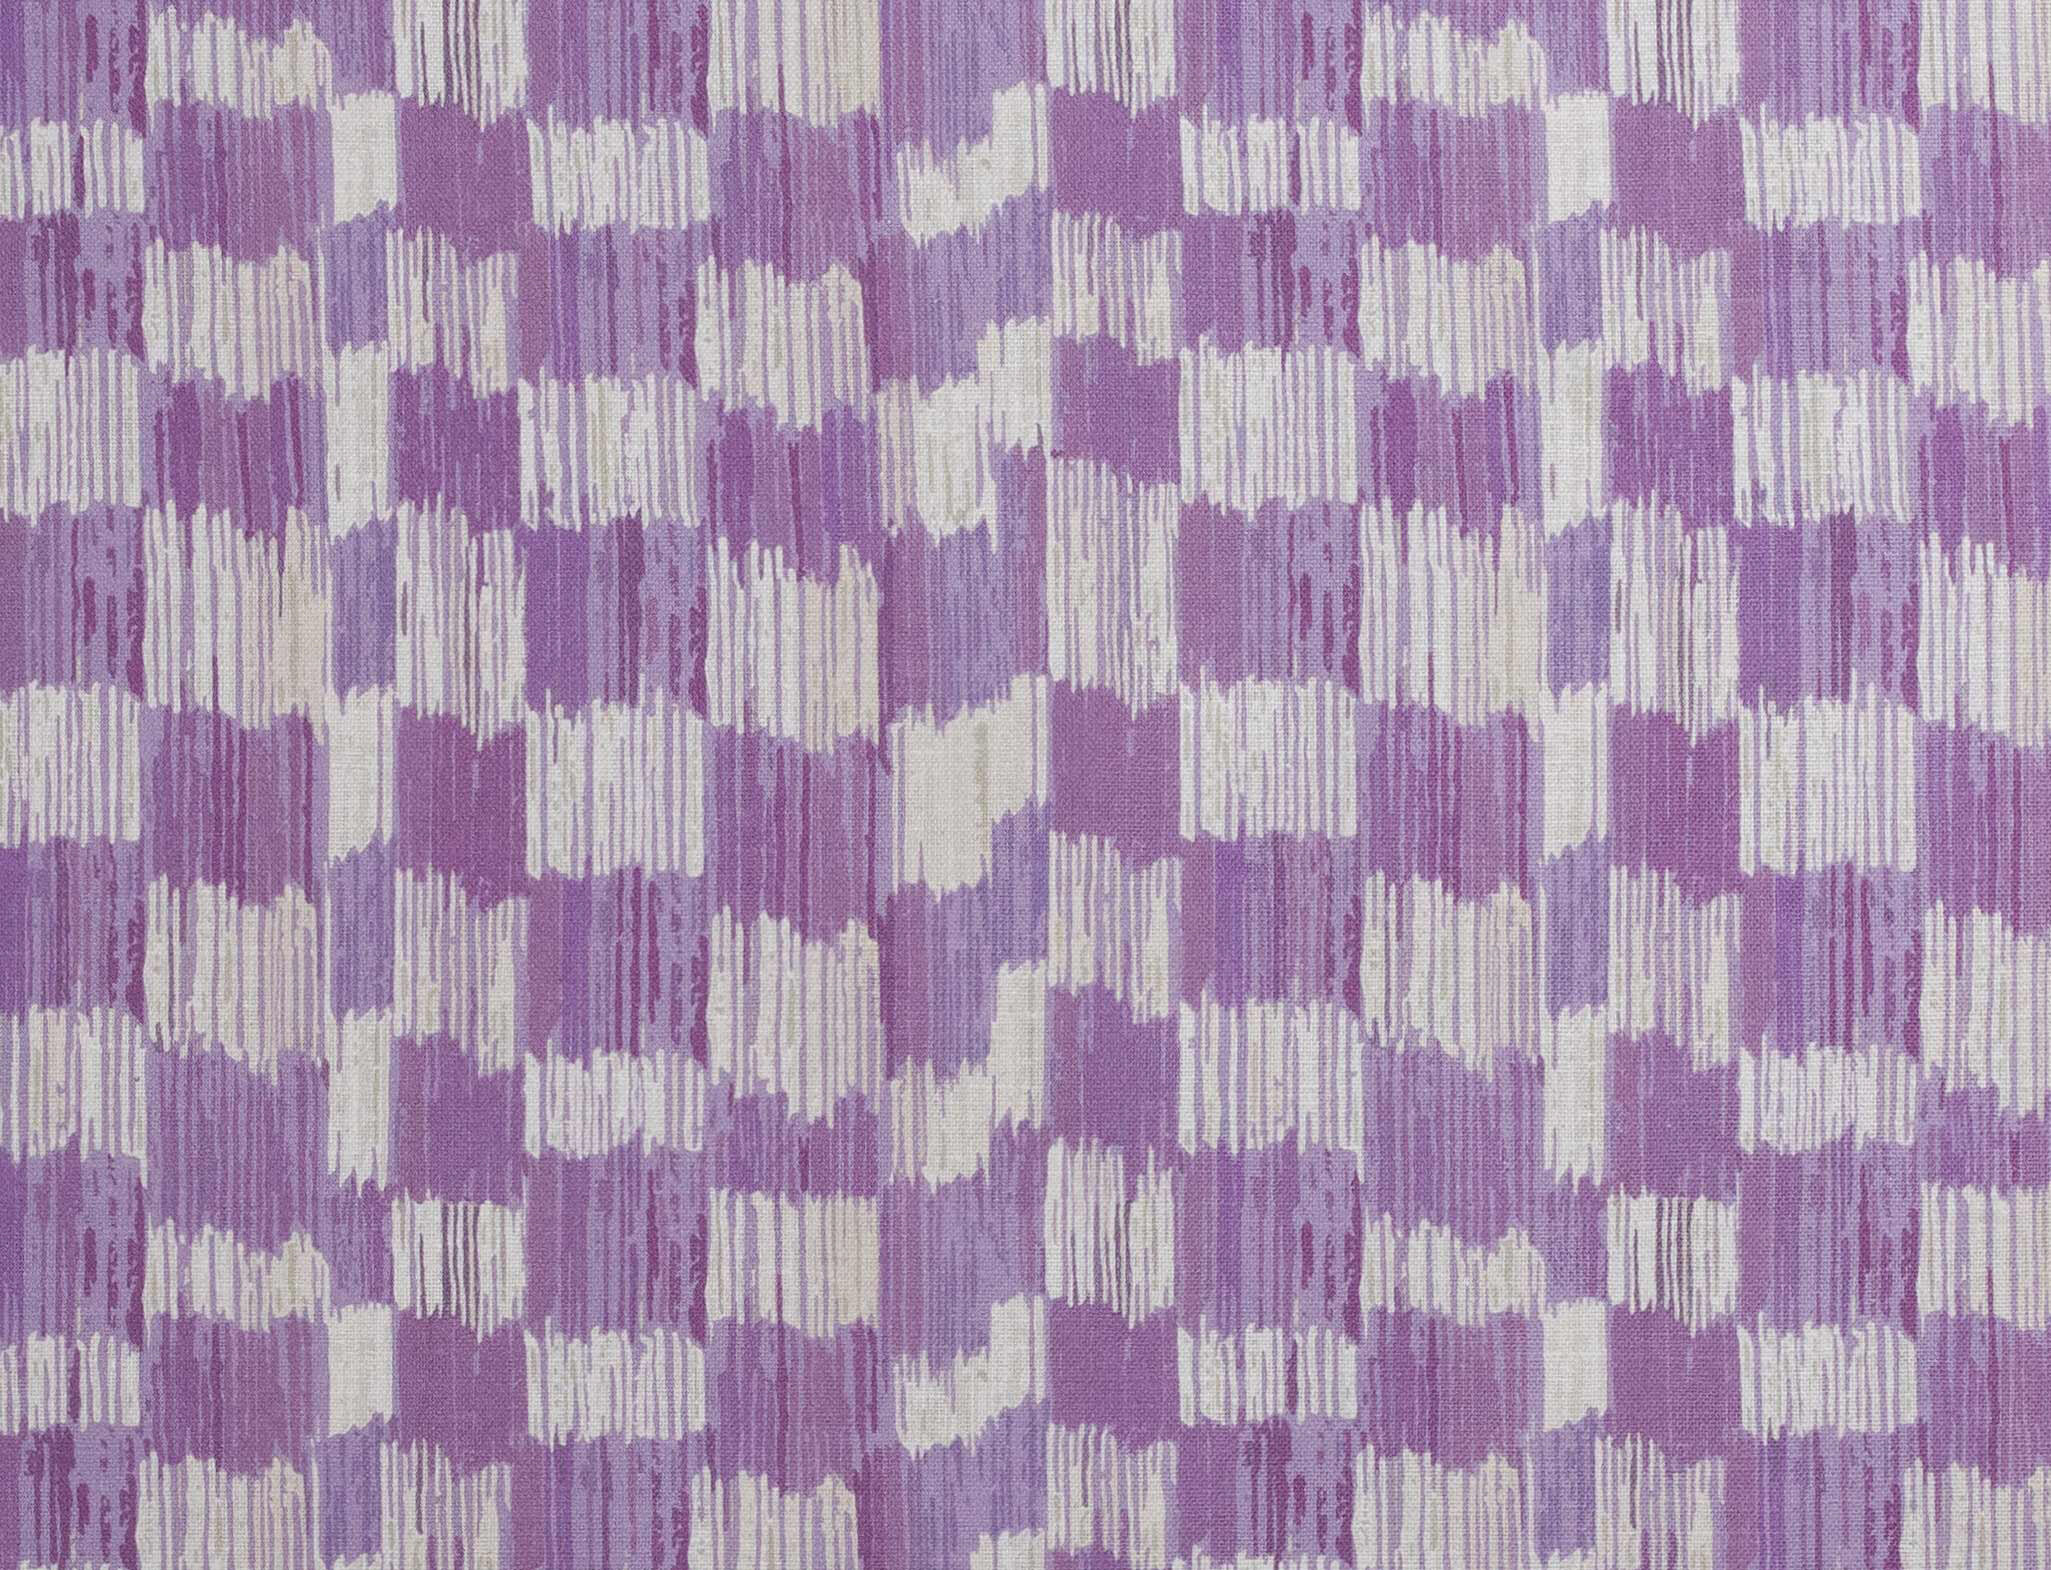 isobel-mills-crinkled-check-violet-7559-web.jpg